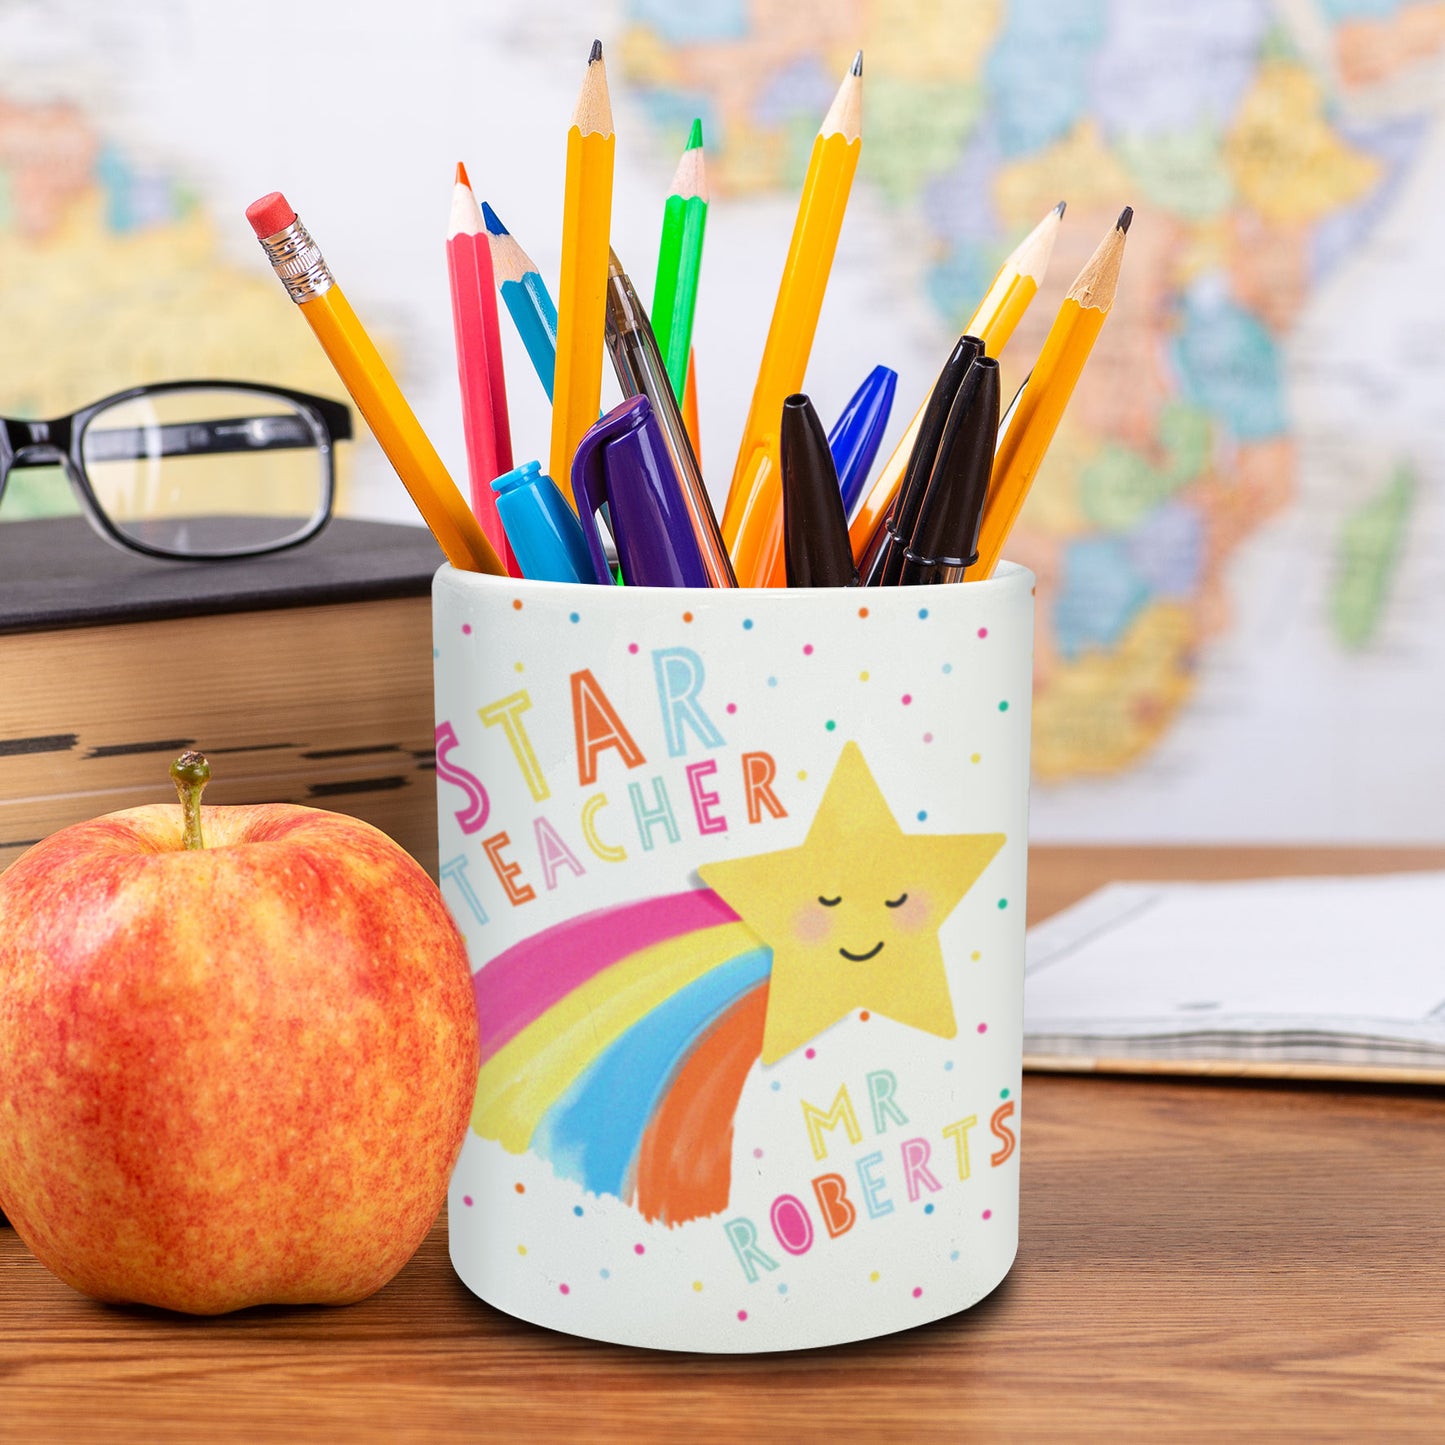 Star Teacher Personalised Pencil Pot | Thank you teacher gift | Teacher Desk Organiser Gift | Personalised Teacher Gift